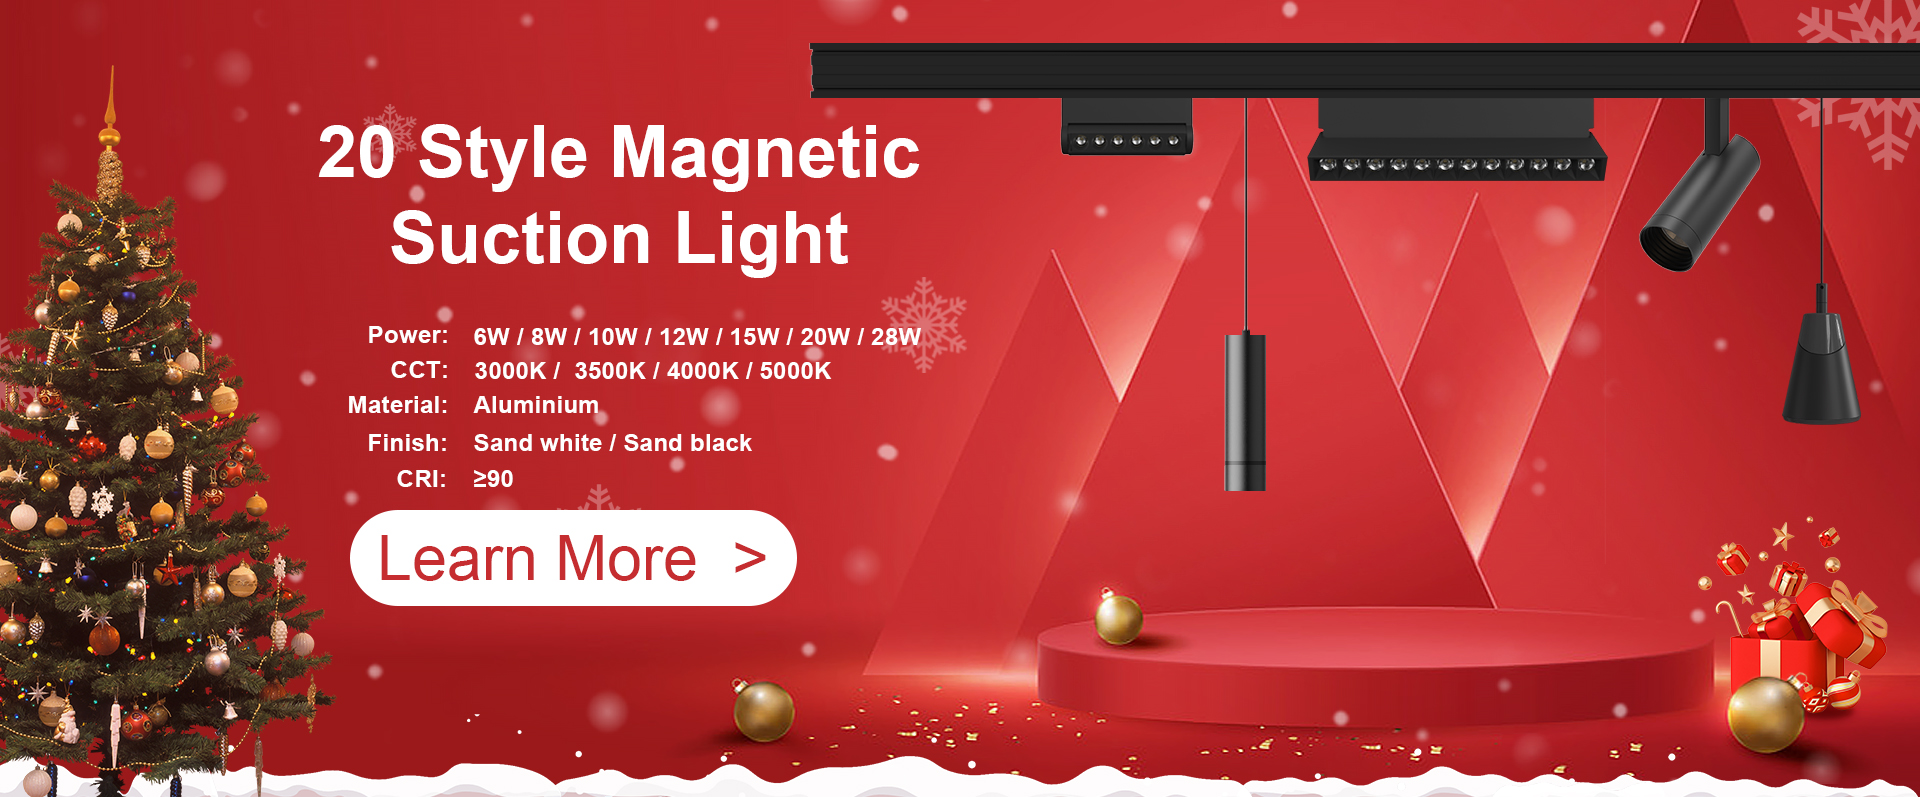 20 Style MagneticSuction Light